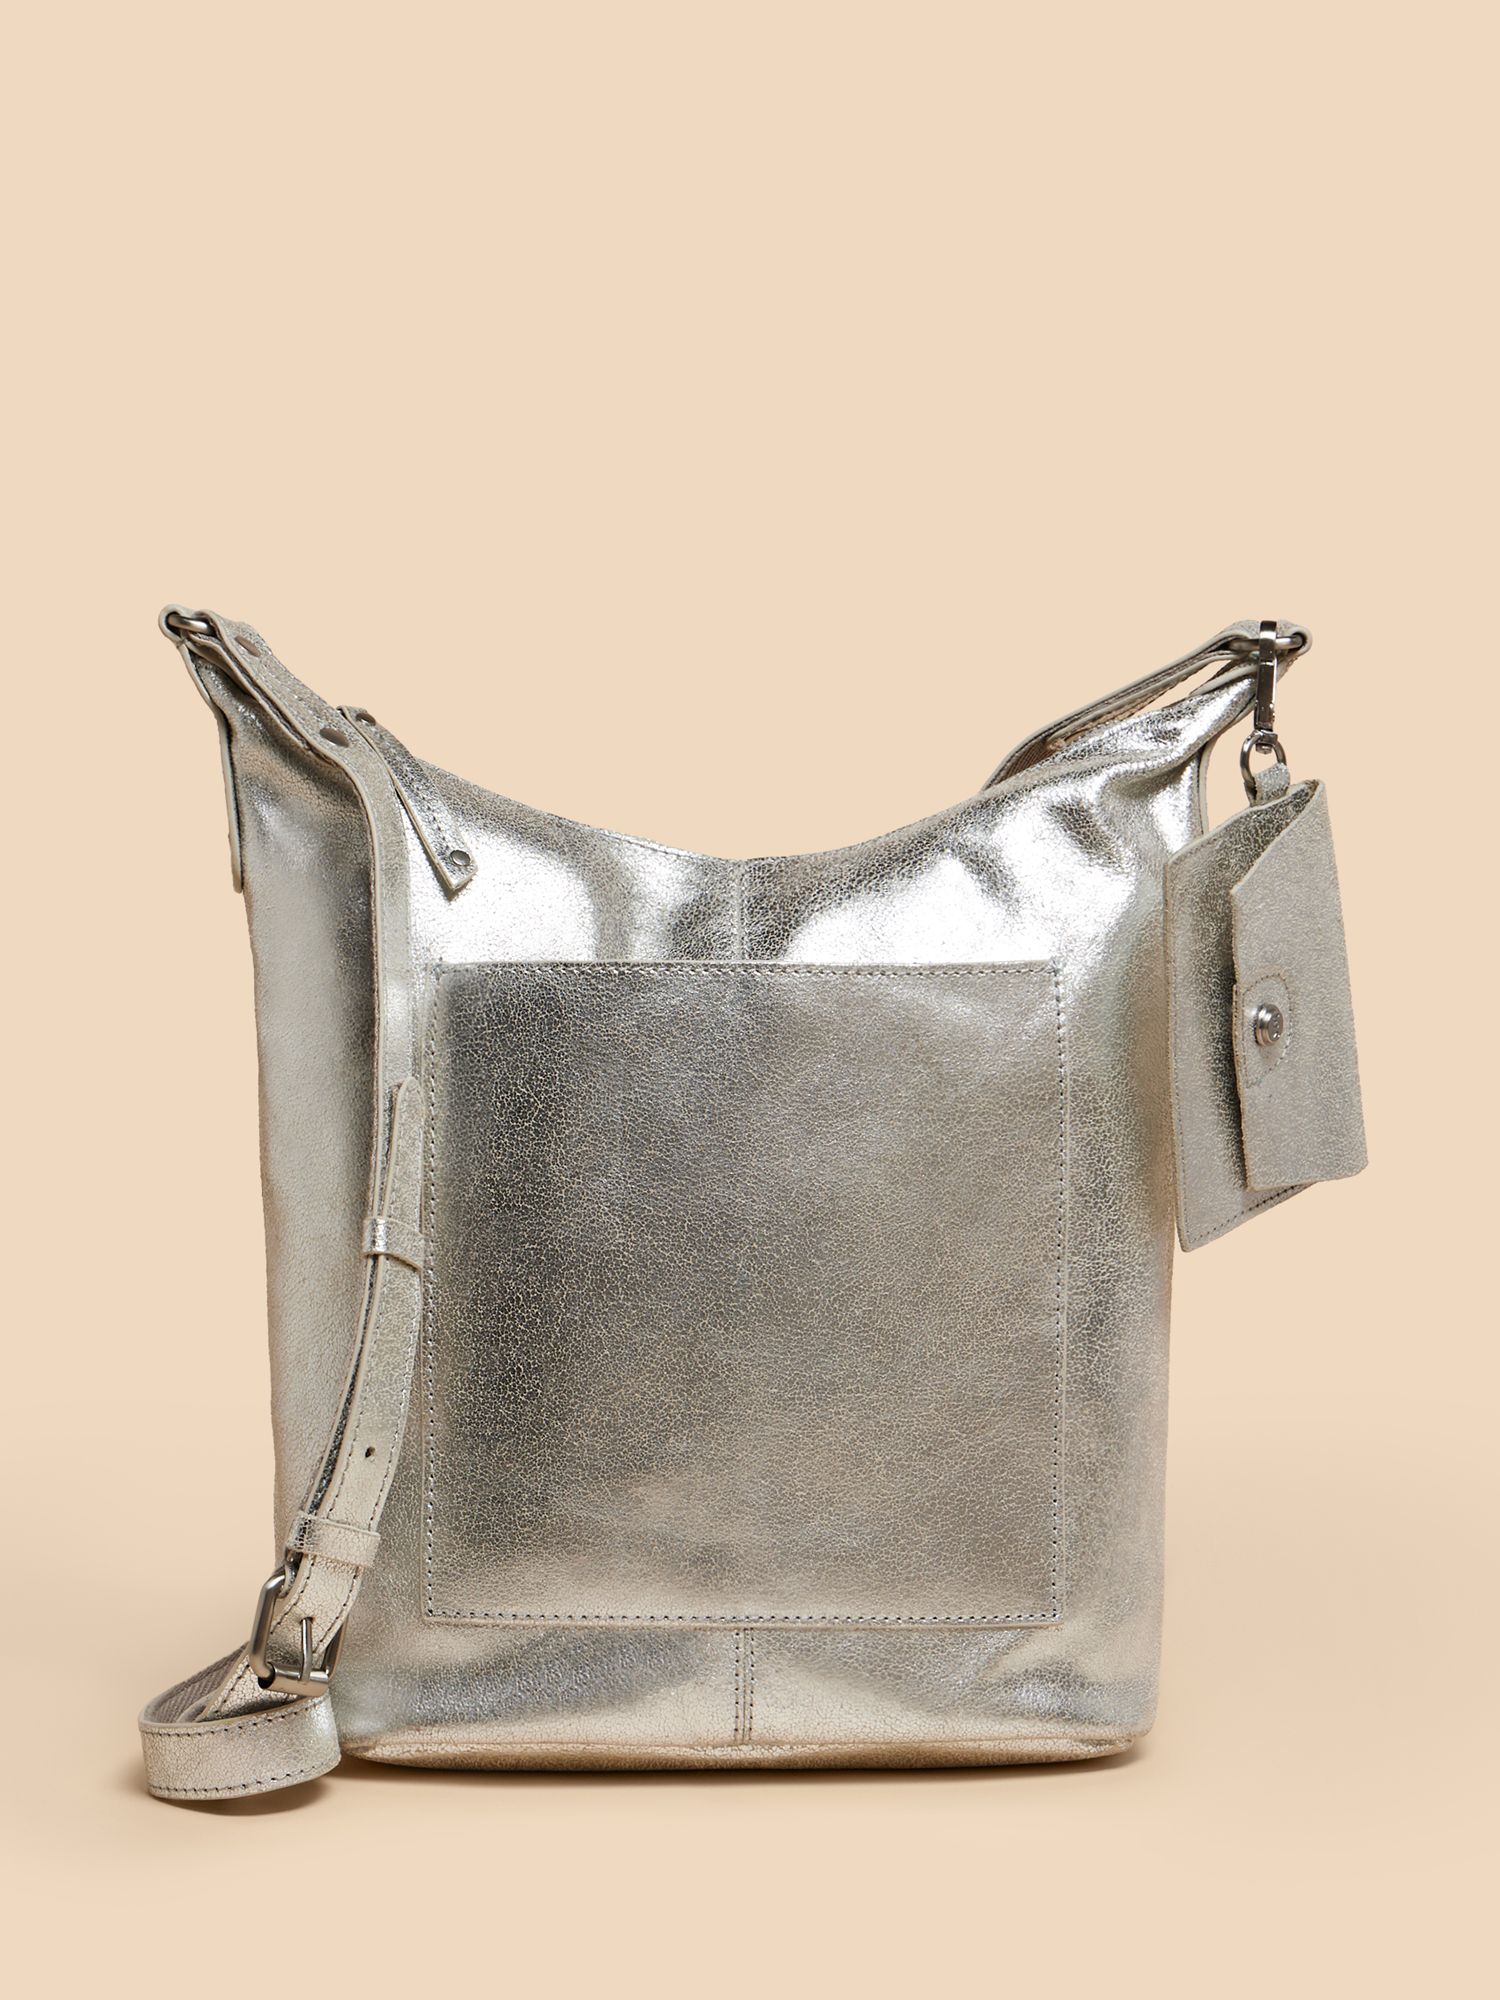 Кожаная сумка через плечо Fern White Stuff, серебряный